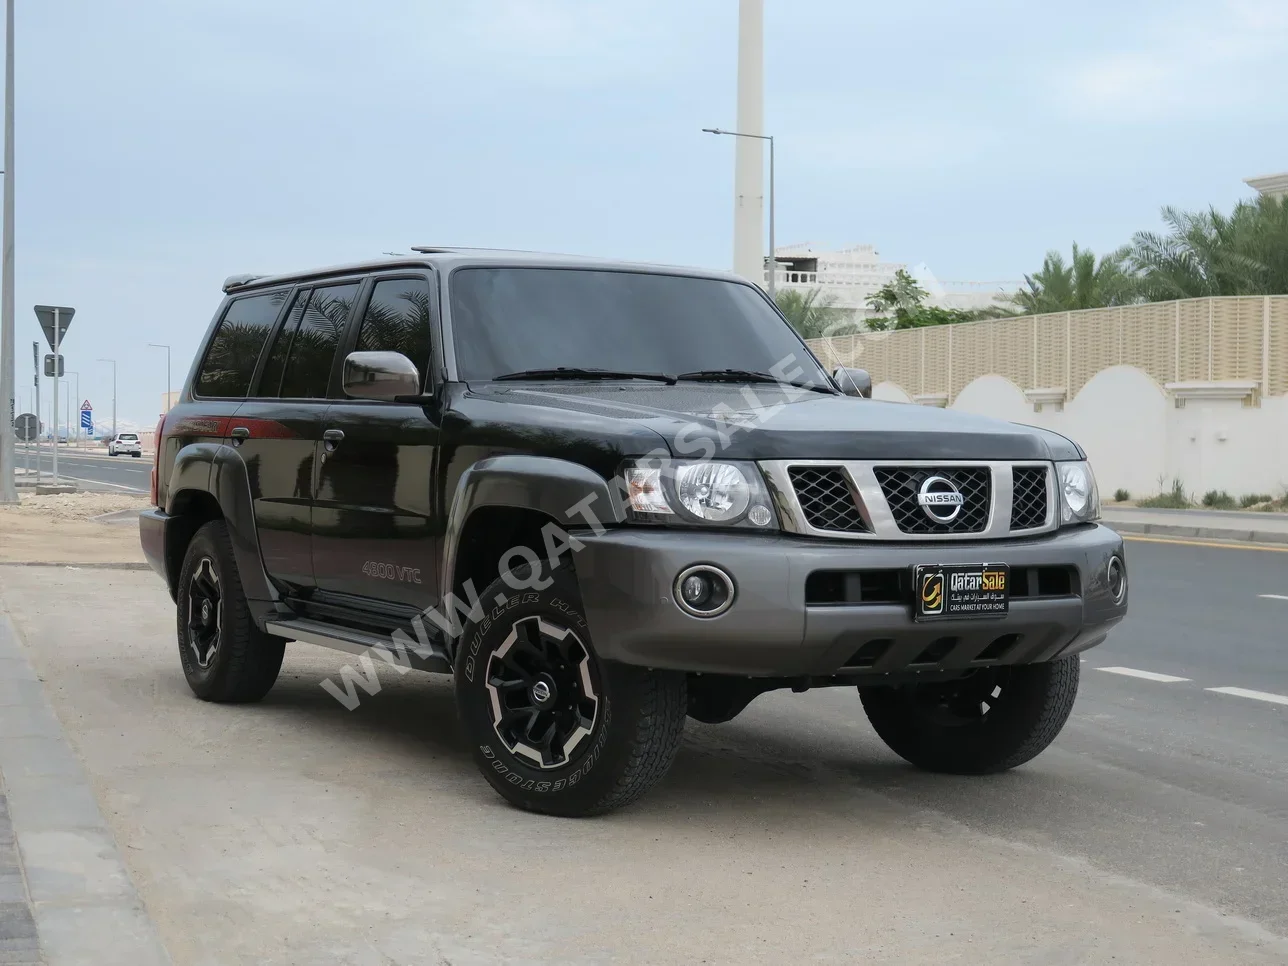 Nissan  Patrol  Super Safari  2022  Automatic  55,000 Km  6 Cylinder  Four Wheel Drive (4WD)  SUV  Black  With Warranty